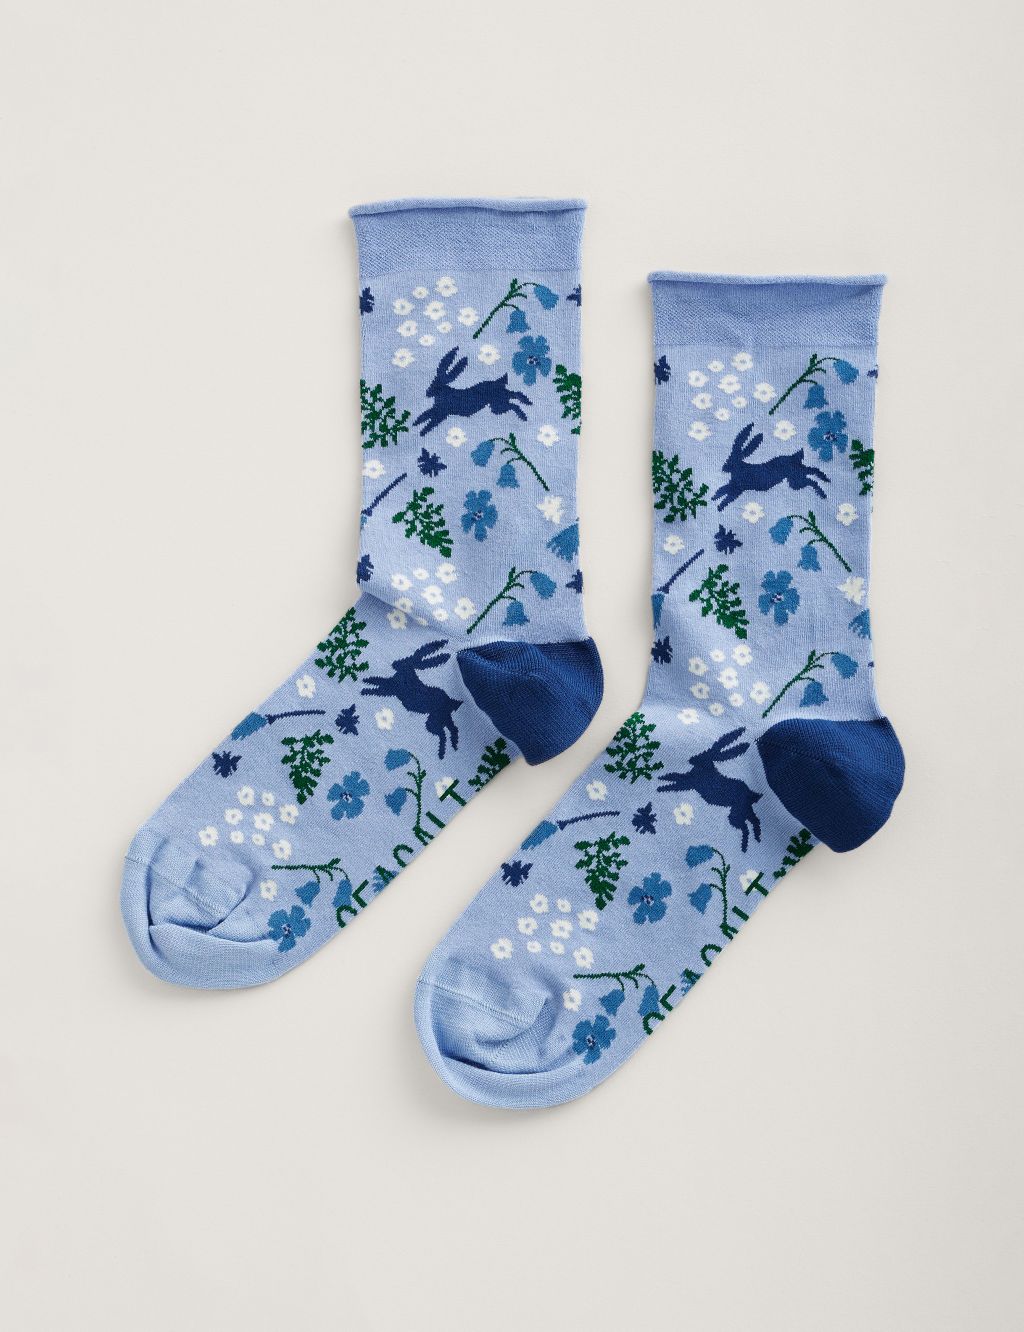 Printed Ankle High Socks image 1